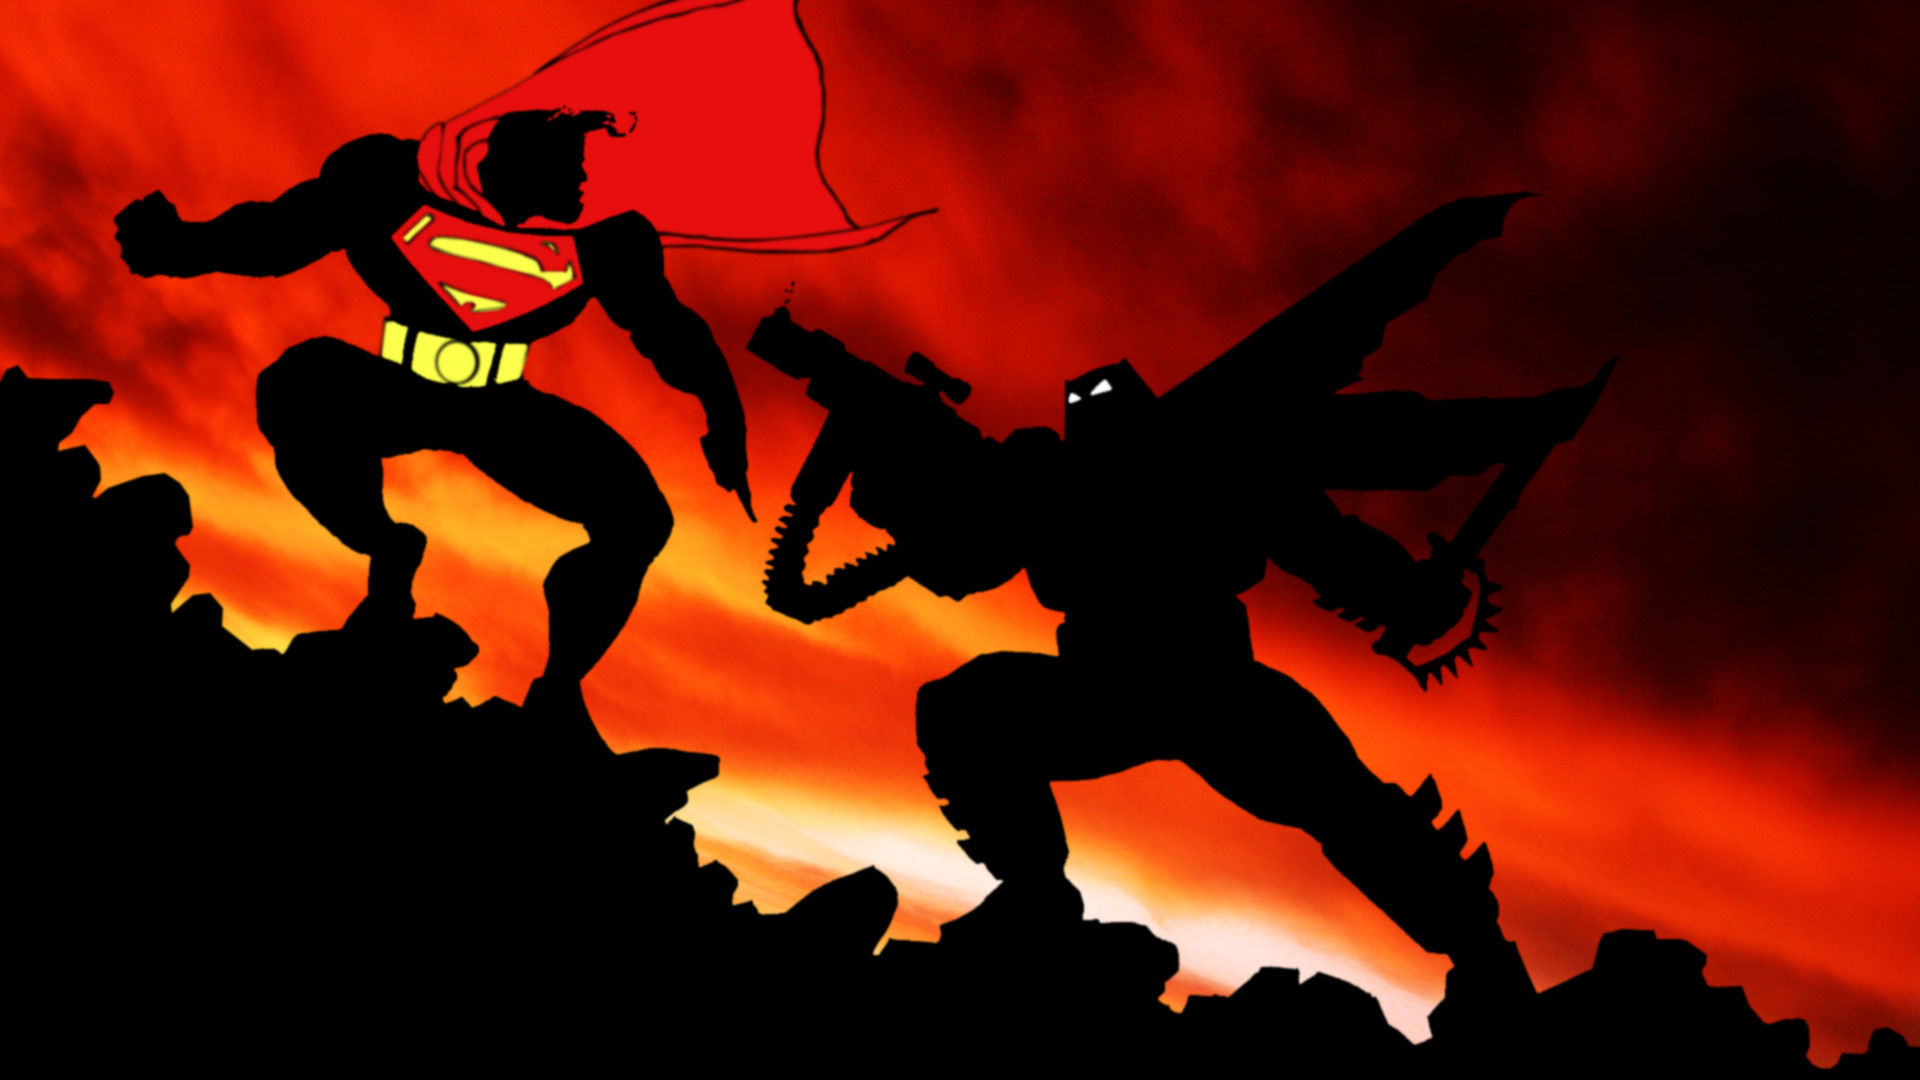 Batman V Superman Zack Snyder On Dark Knight Returns Influence